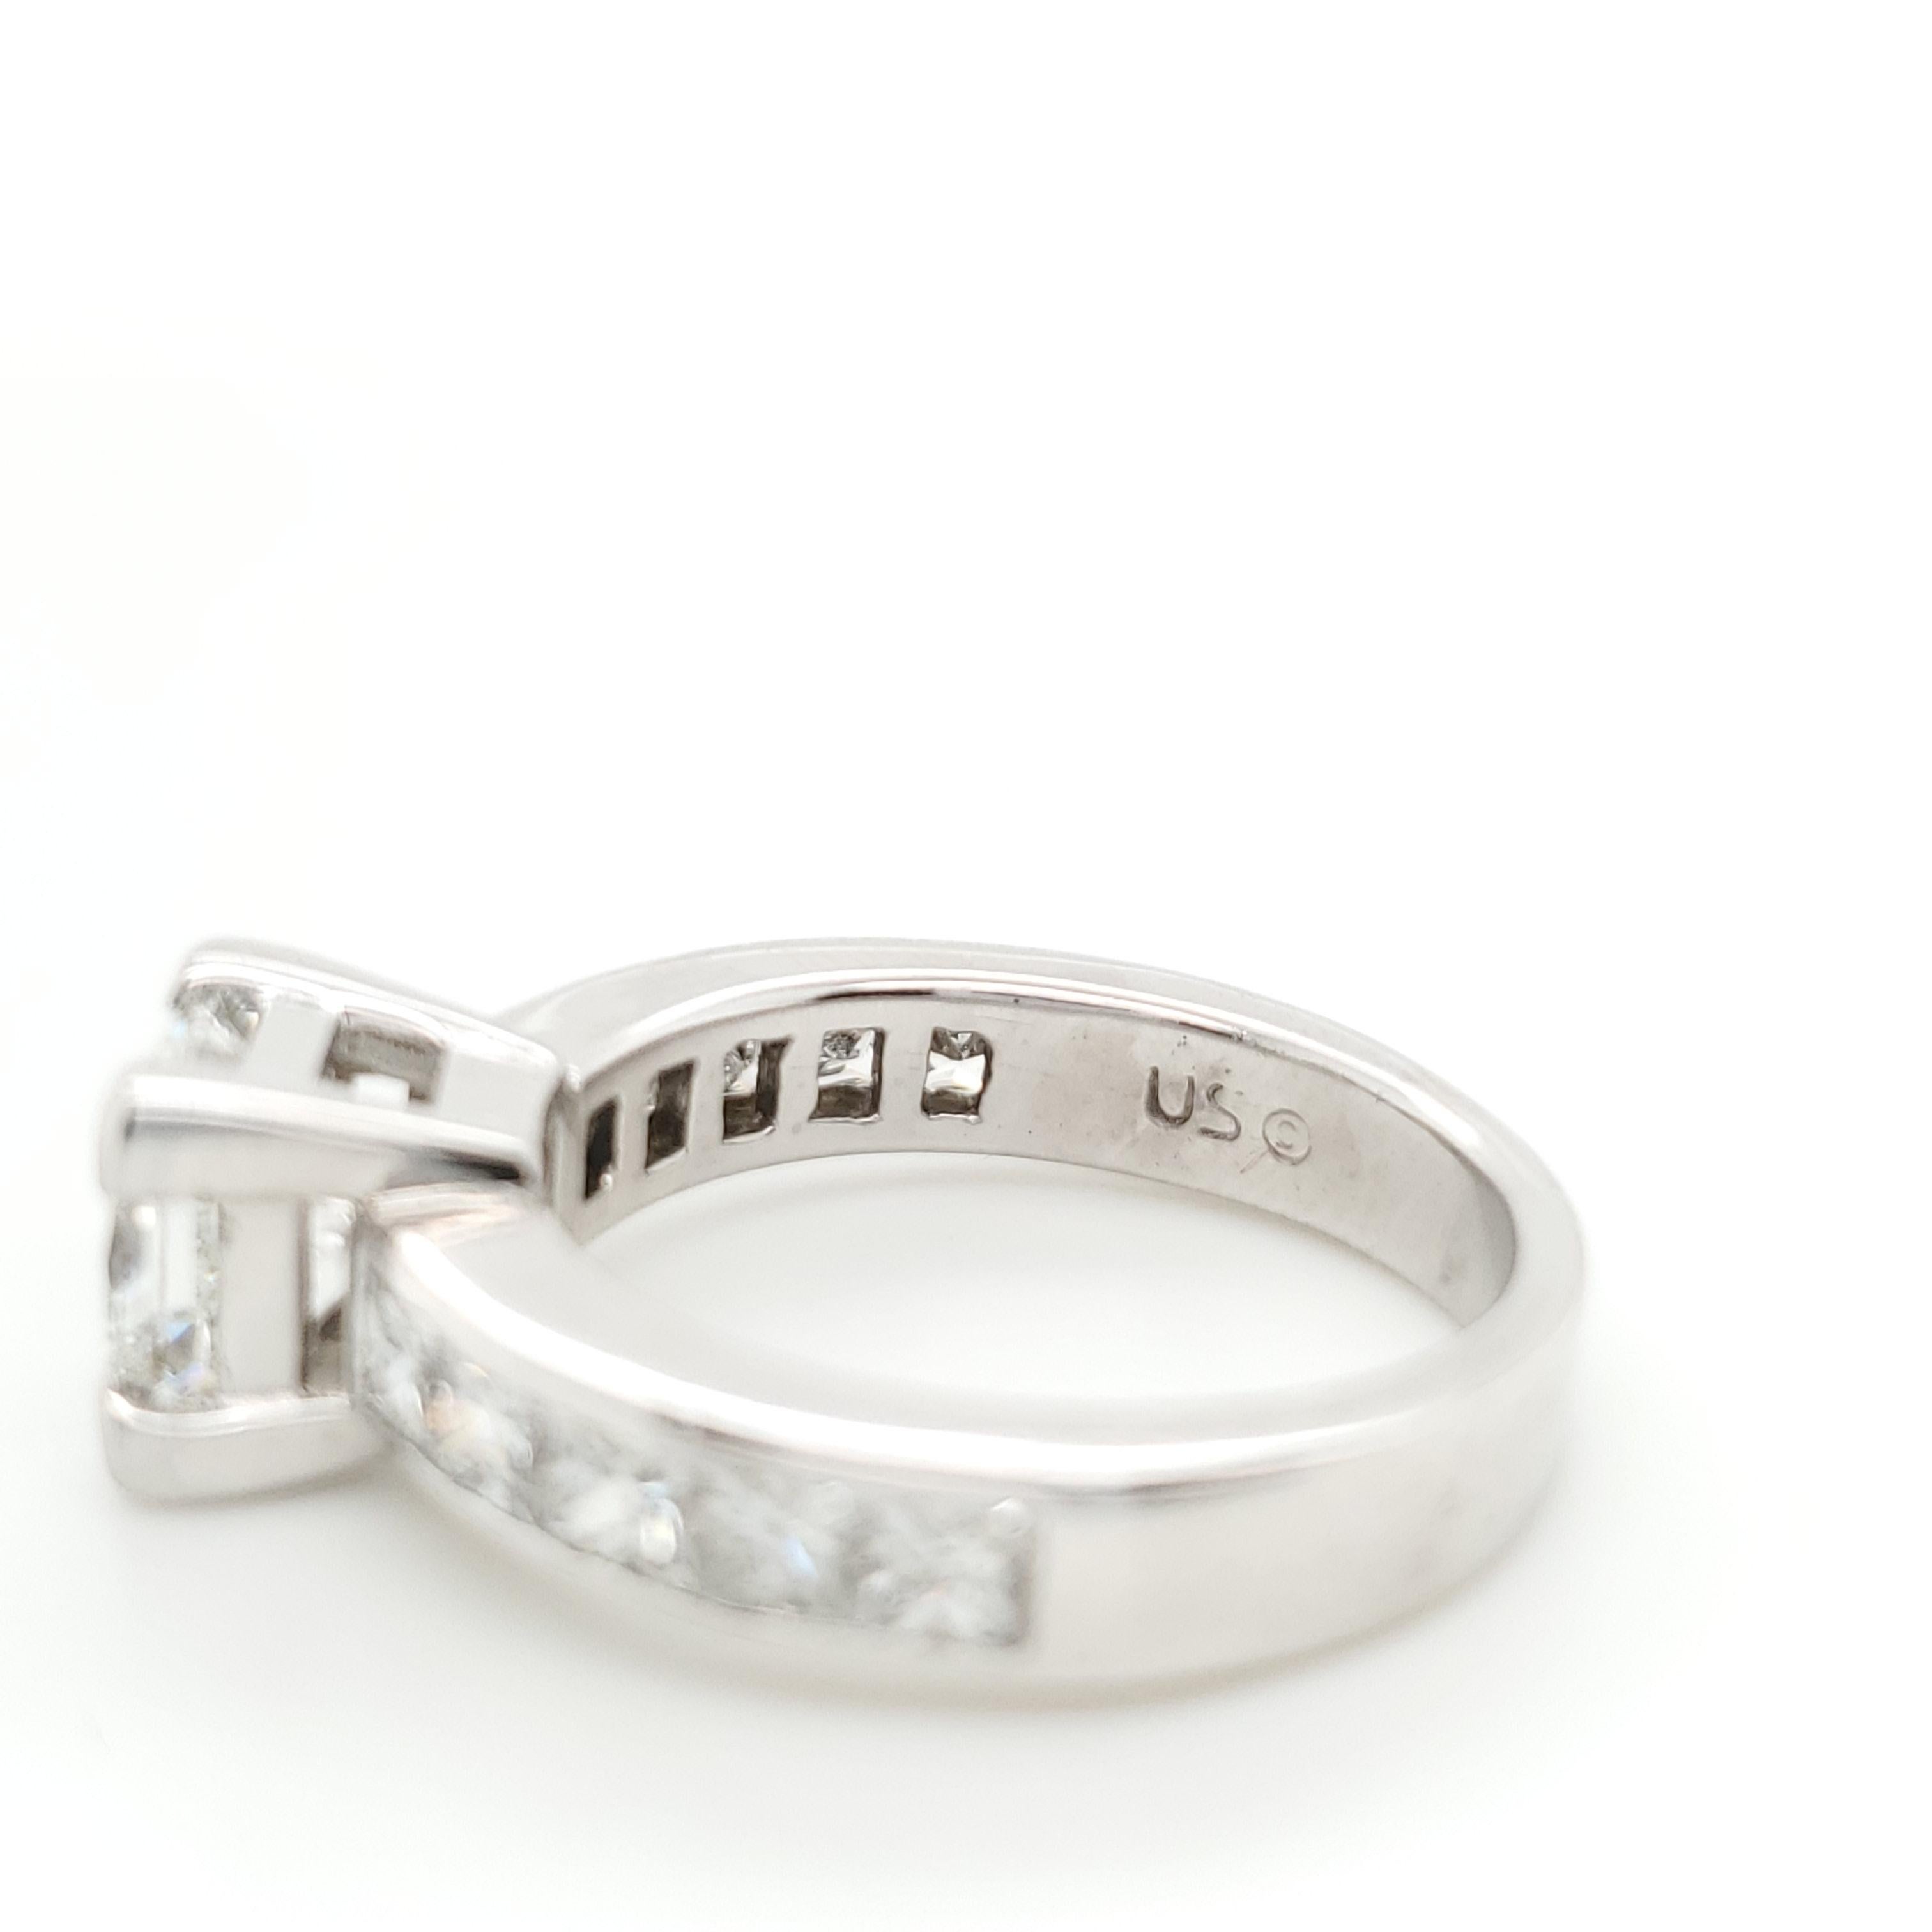 1.61 carat diamond ring